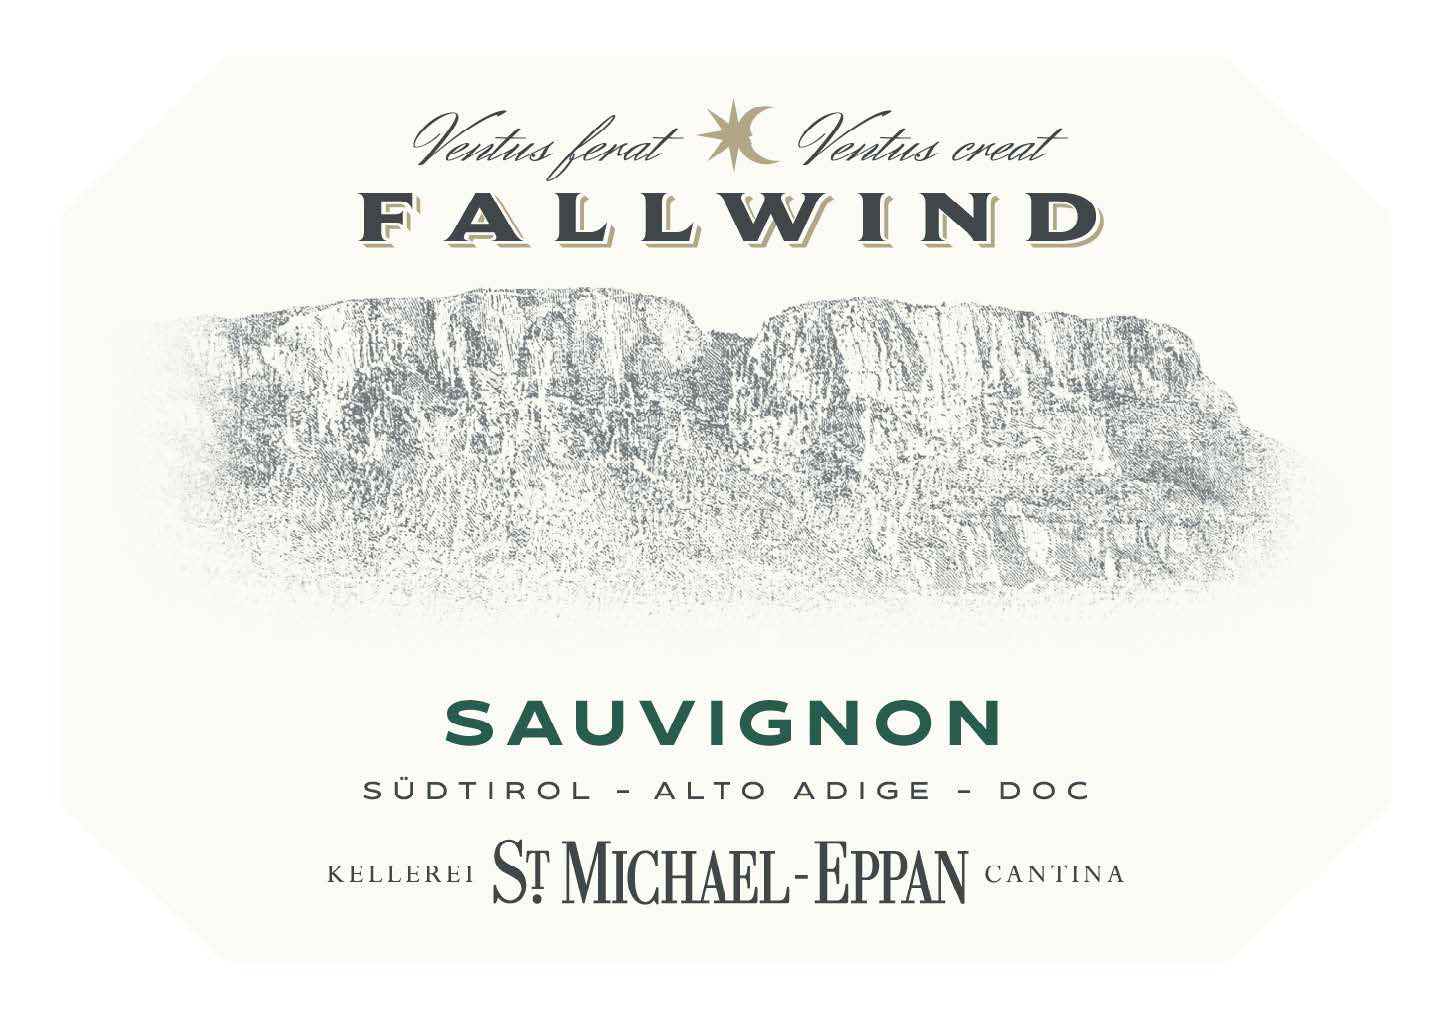 St. Michael-Eppan - Sauvignon Fallwind label